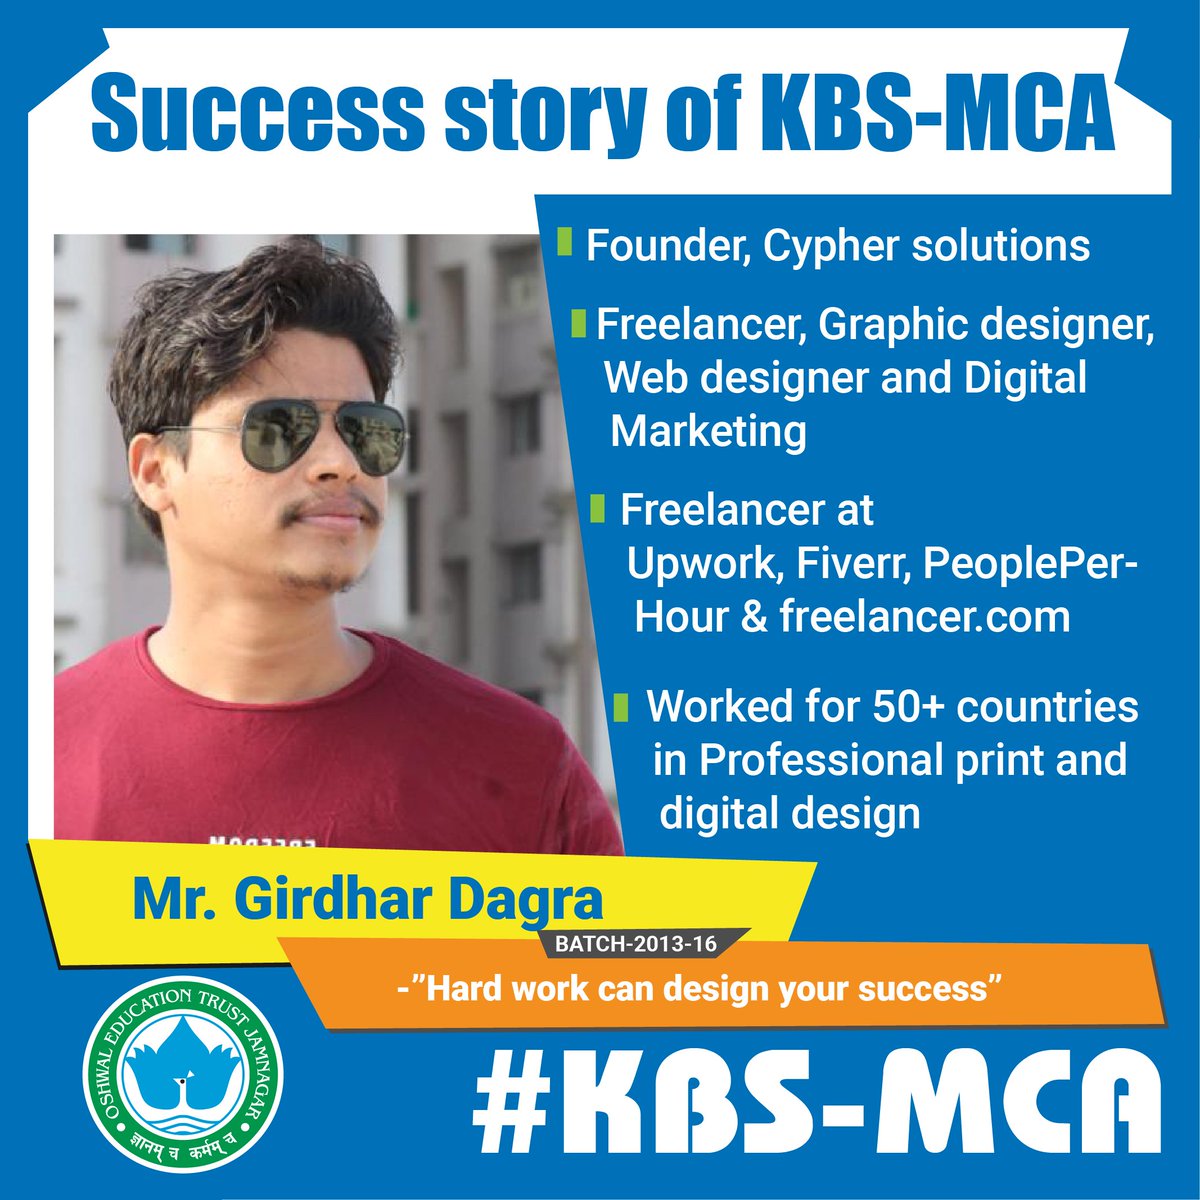 #Girdhar_Dagra
#An_Alumnus_of_JVIMS
#Graphic_Designer
#Founder
#Cypher_Solutions
#Jamnagar
#JVIMS_Memories
#JVIAMS
#MCA
#JVIMS_MCA_College
#MCA_in_Jamnagar